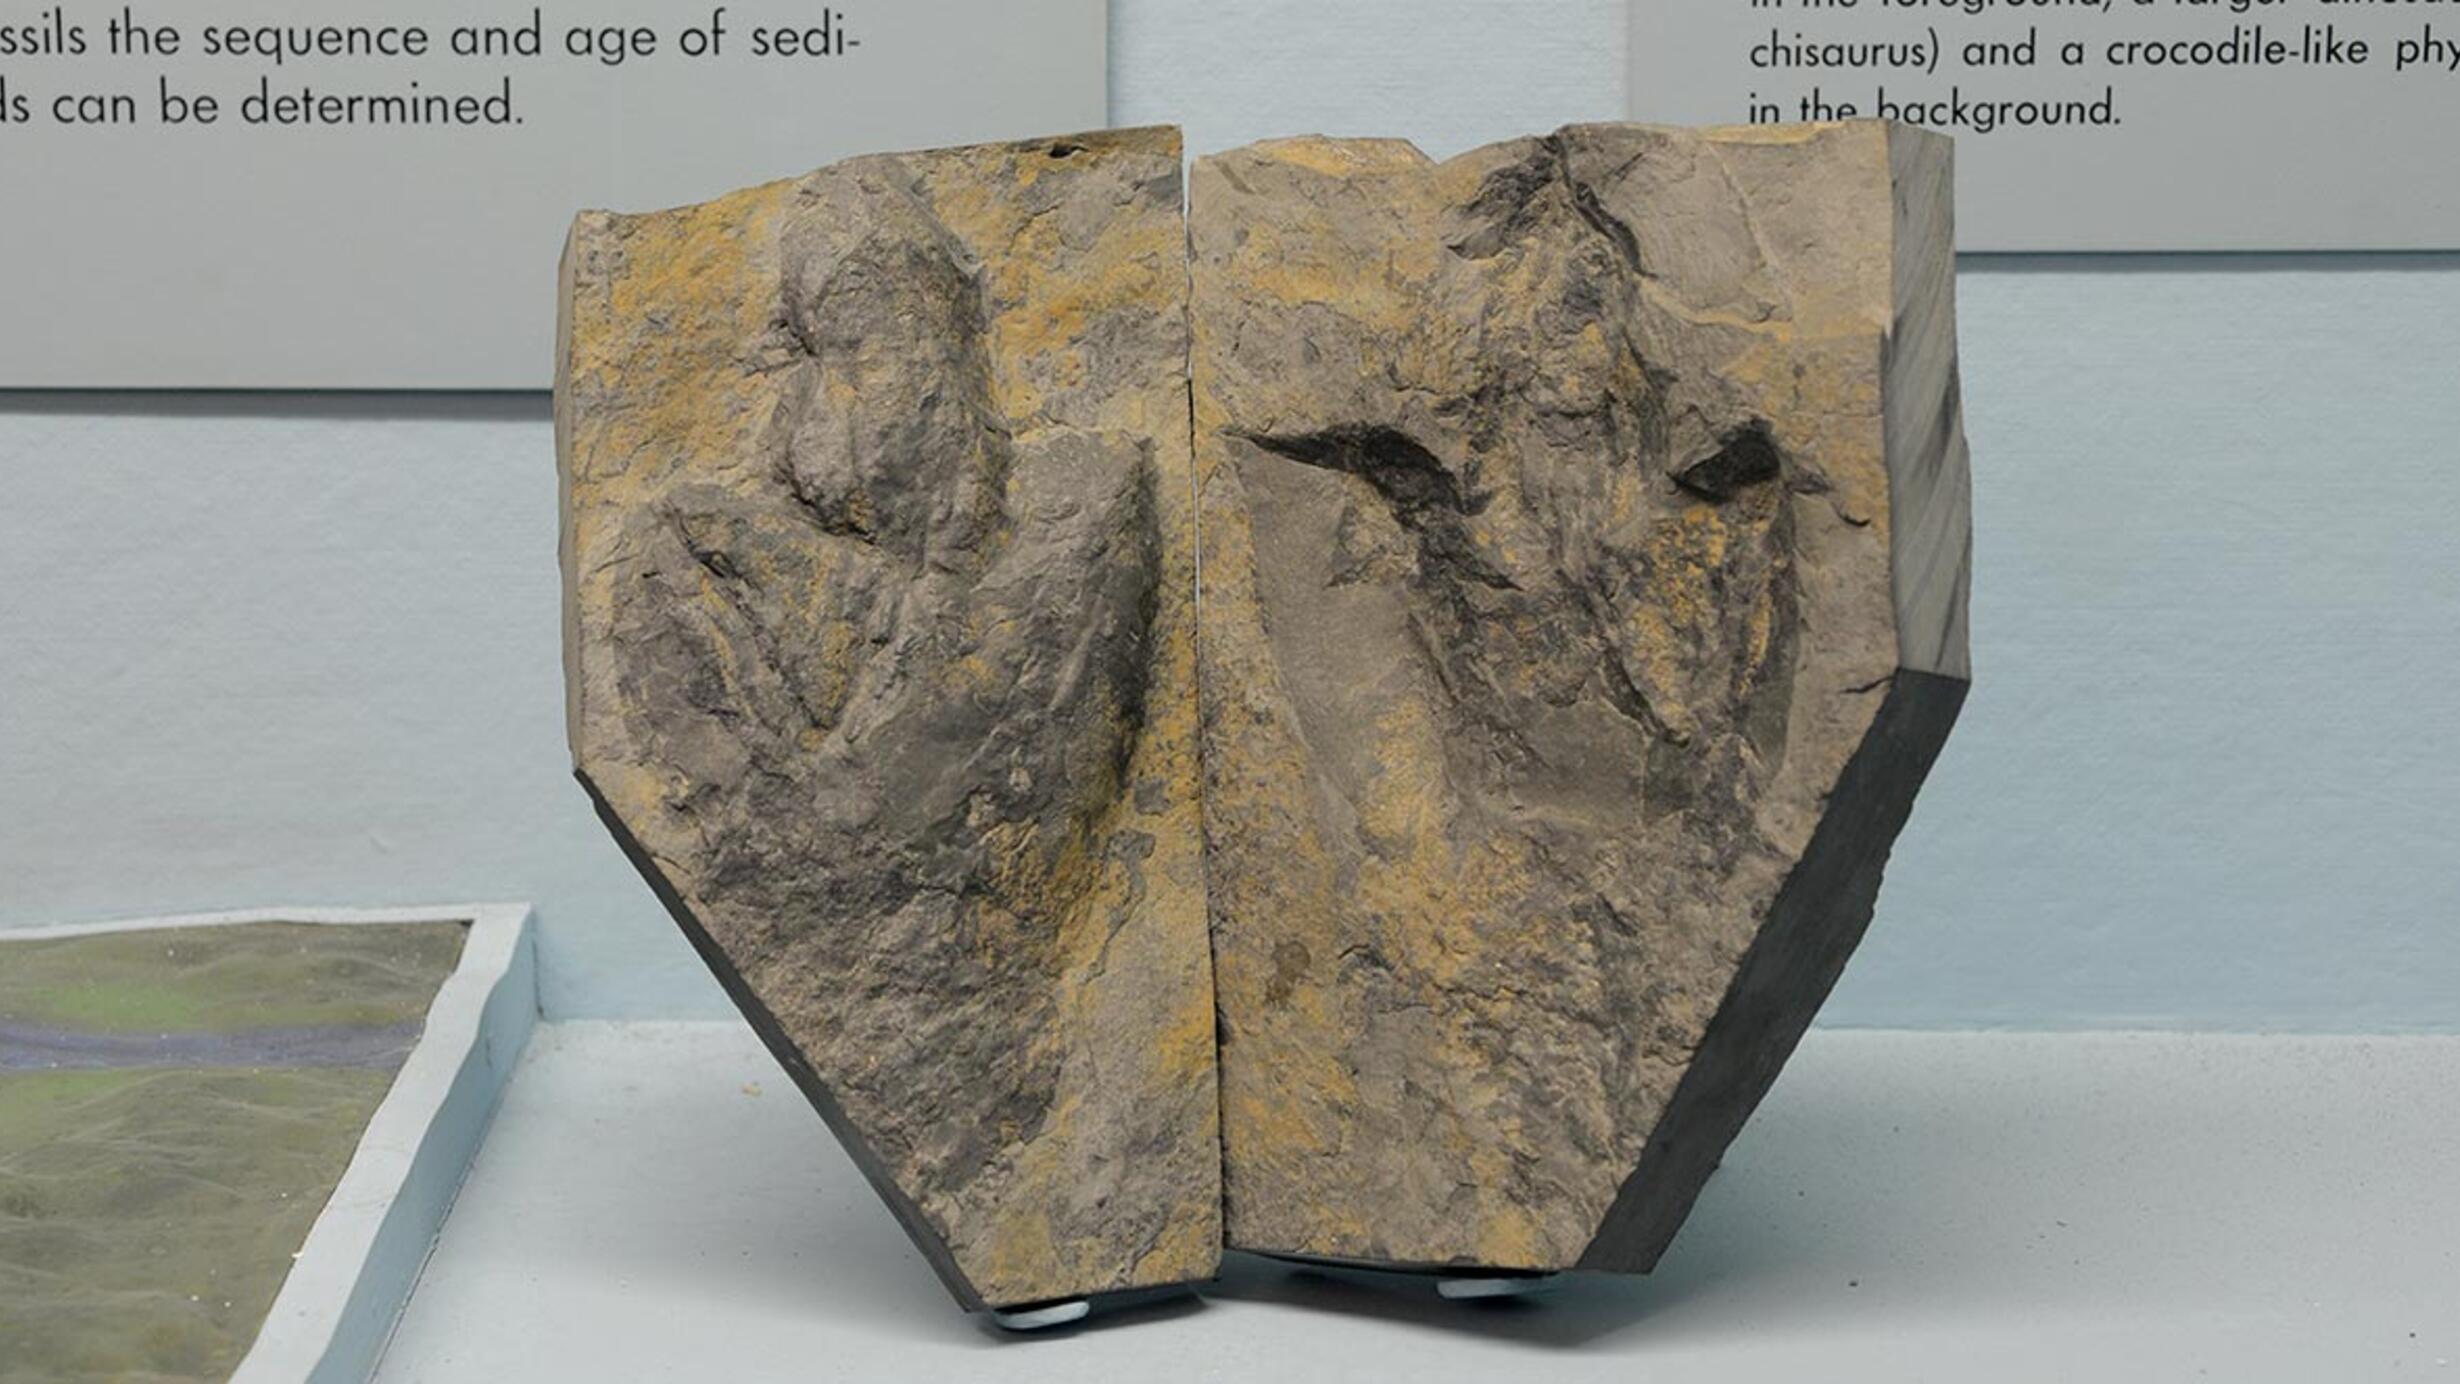 Fossil of dinosaur footprint in museum case